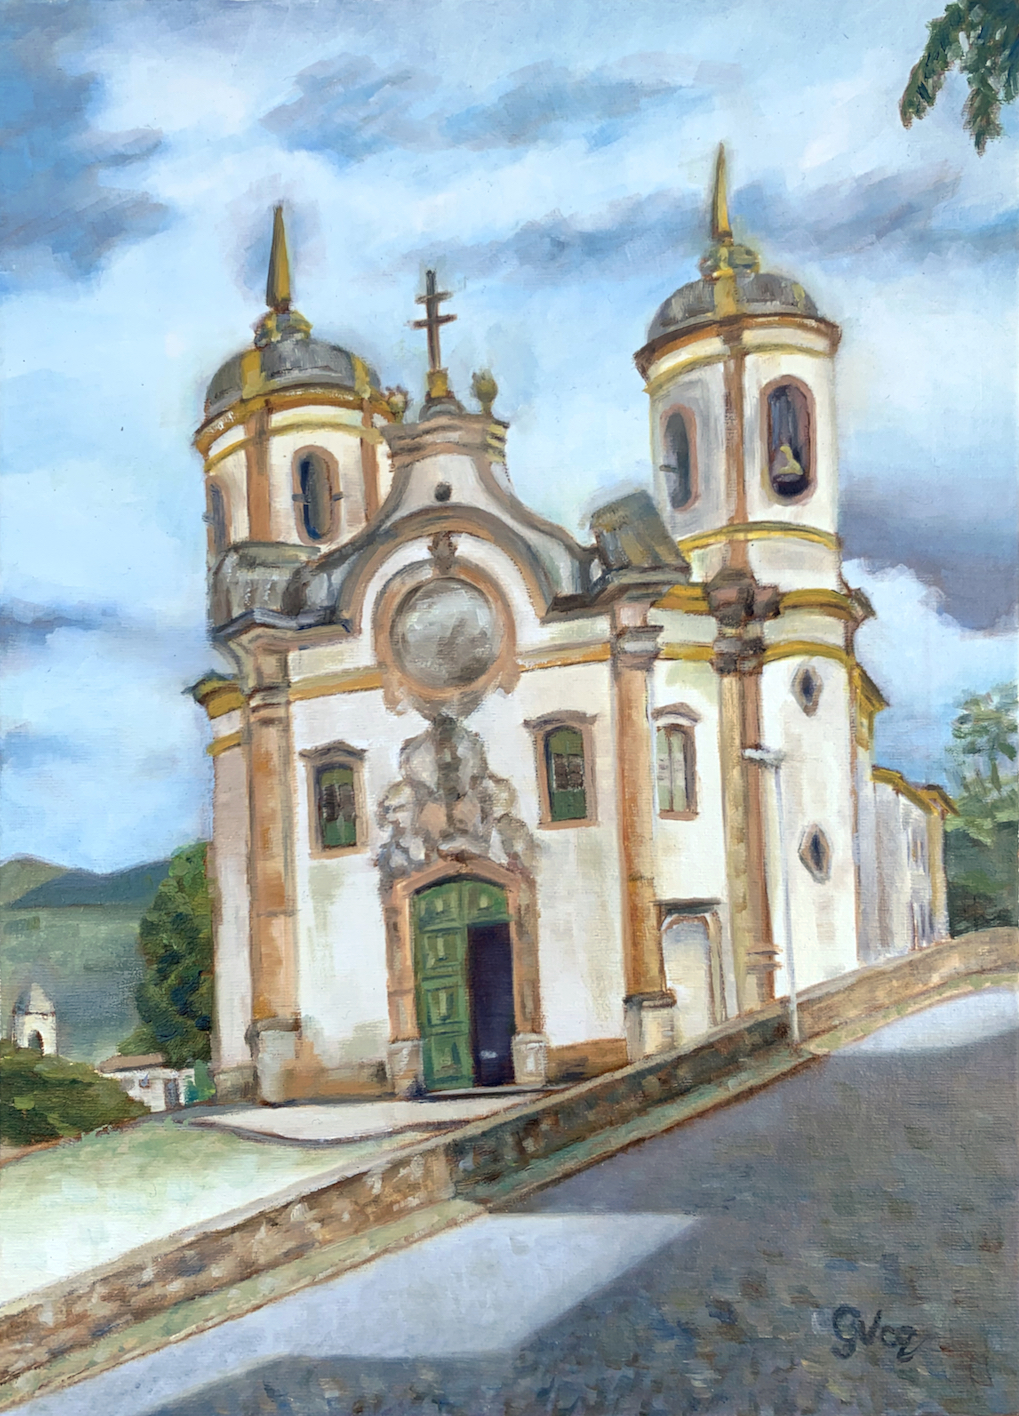 Igreja de São Francisco de Assis, oil on canvas, 35 x 25 cm, 2021